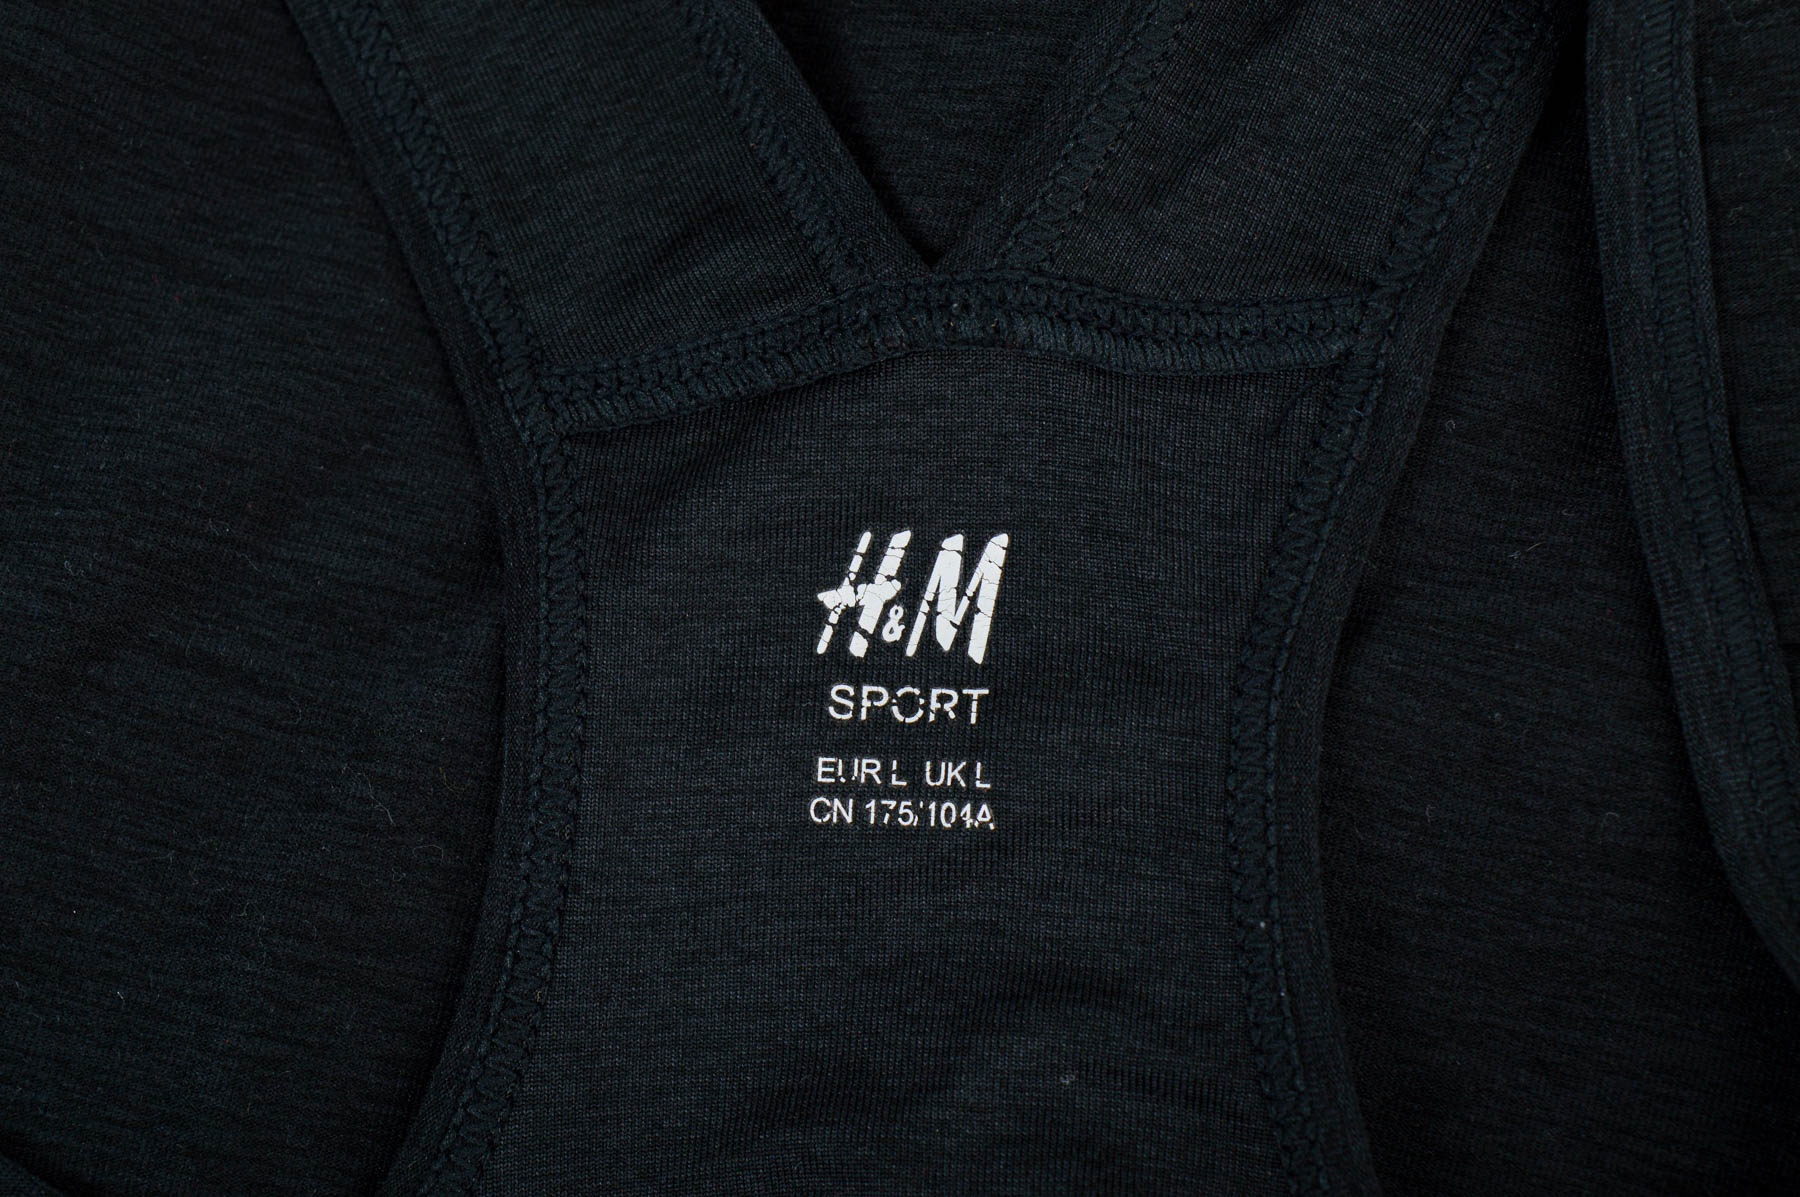 Maiou de damă - H&M Sport - 2